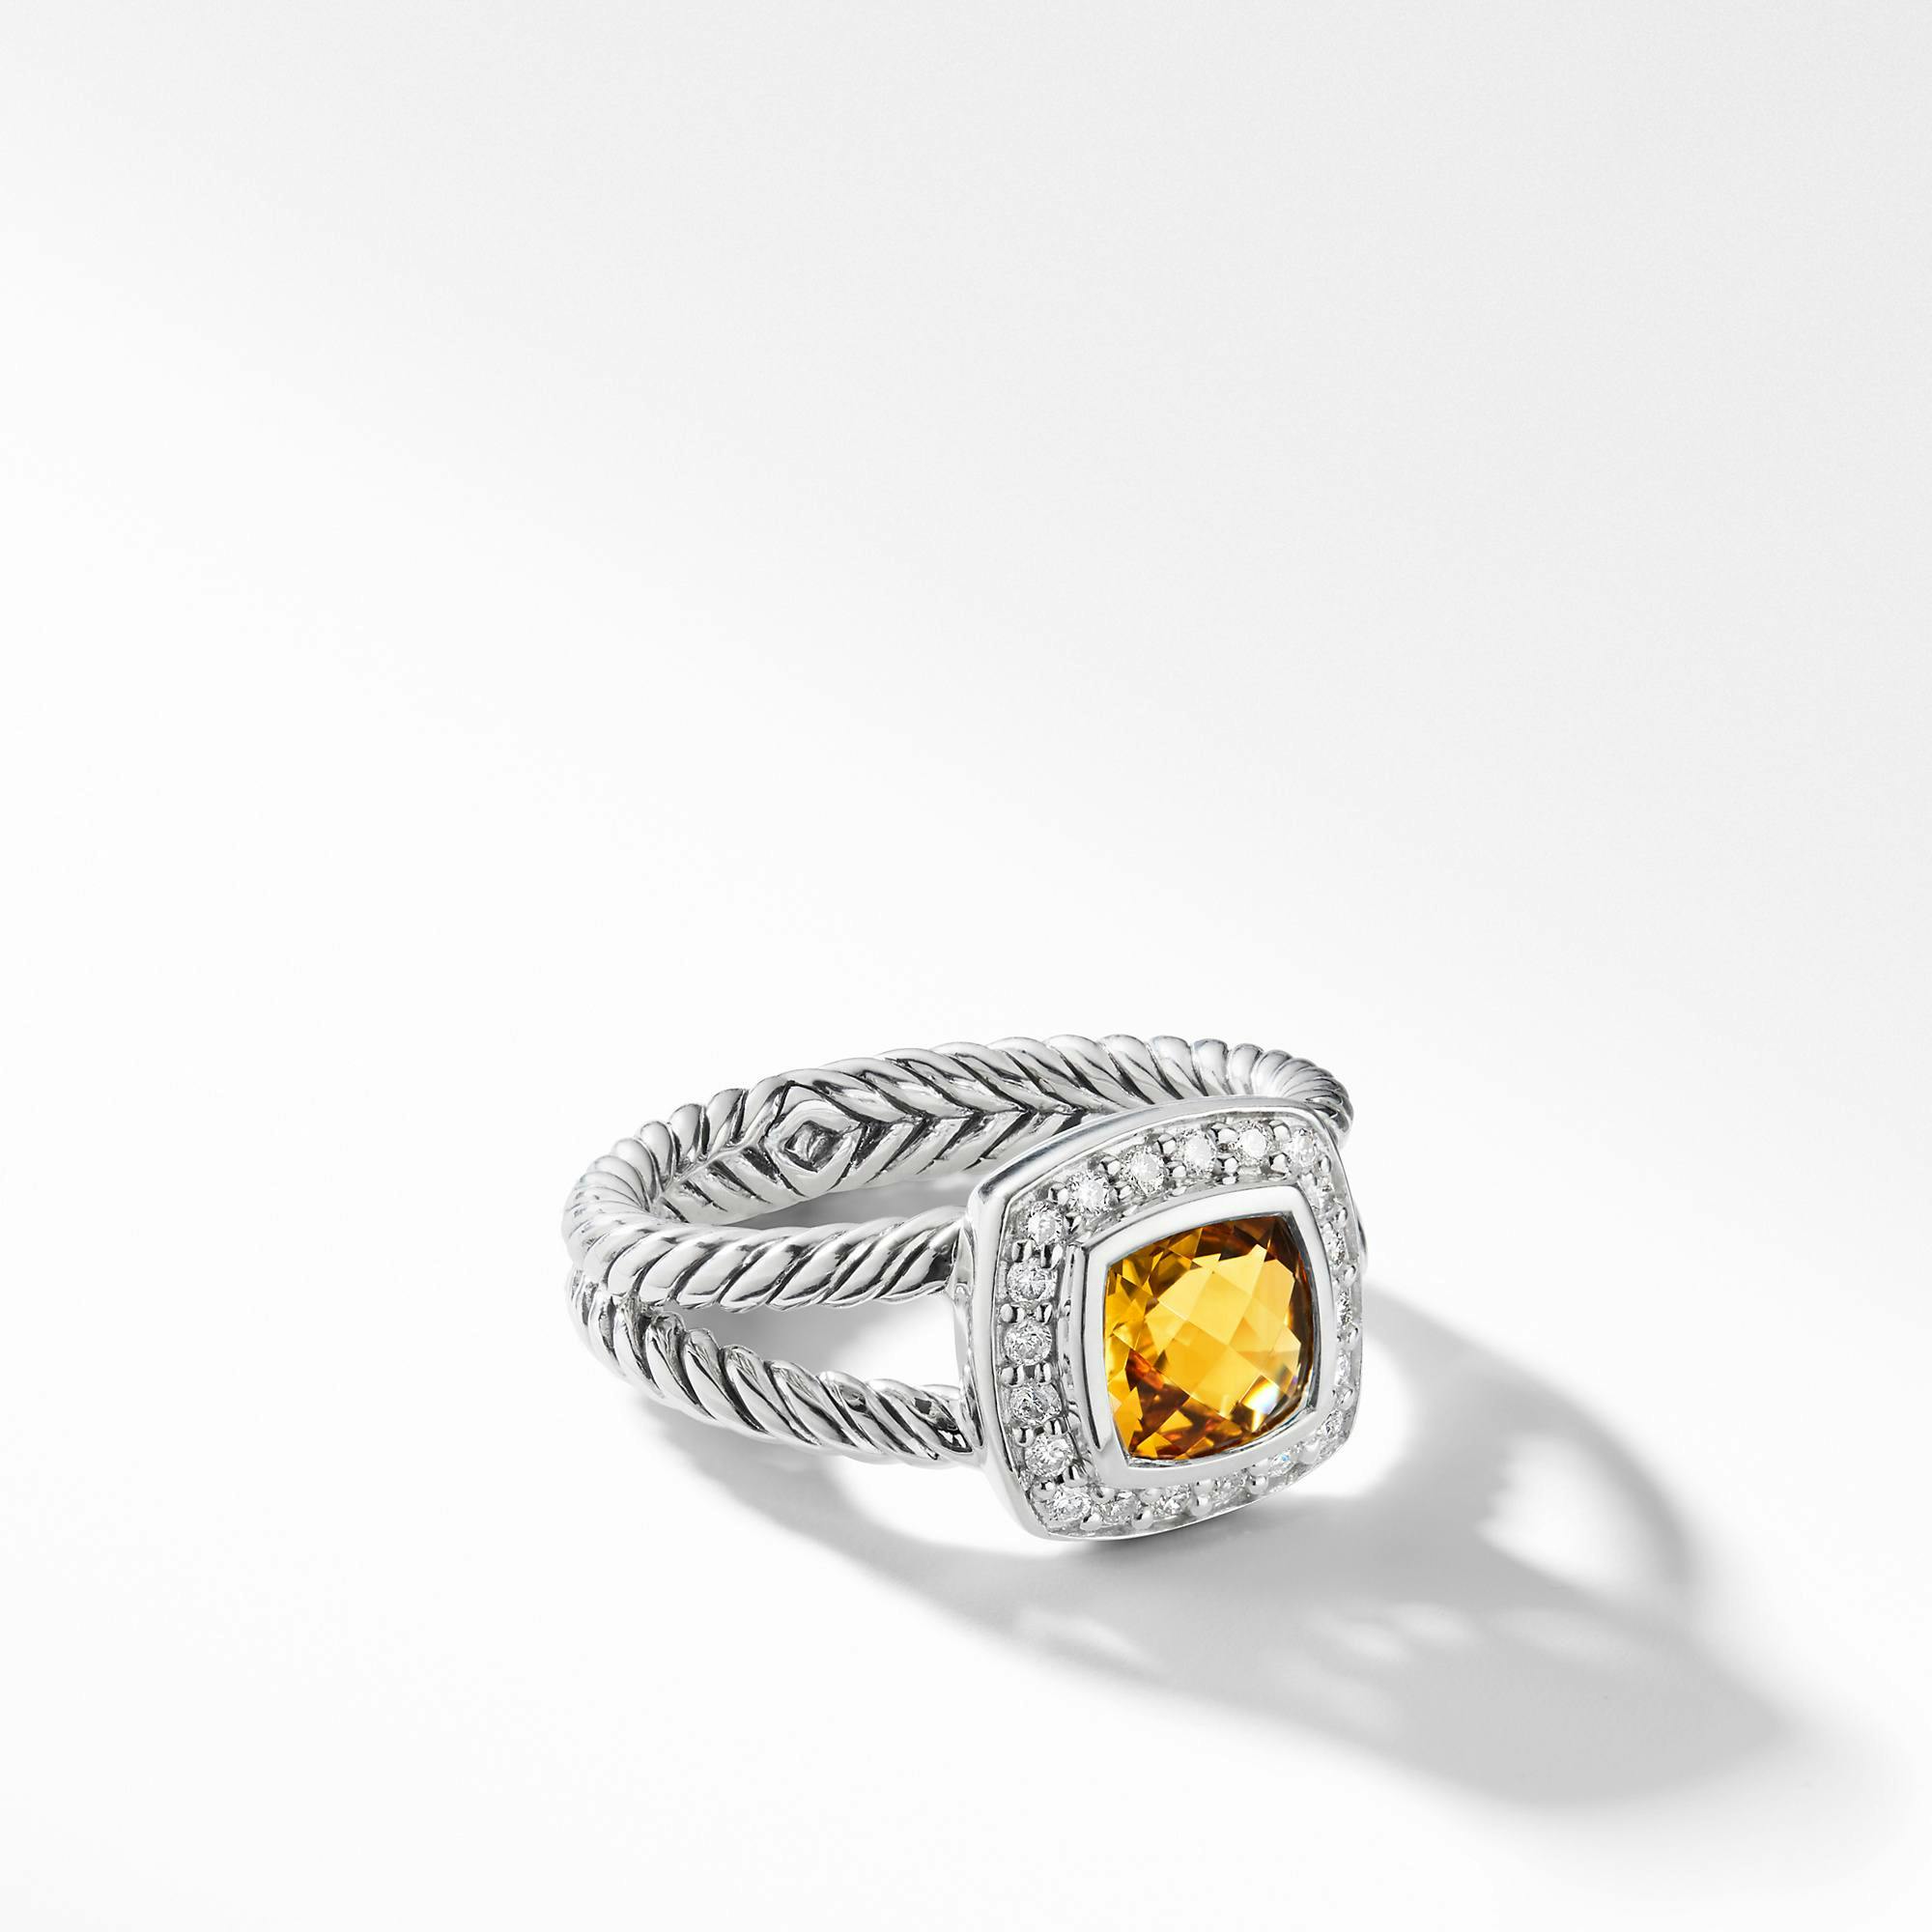 David Yurman Petite Albion Ring with Citrine and Diamonds, size 7